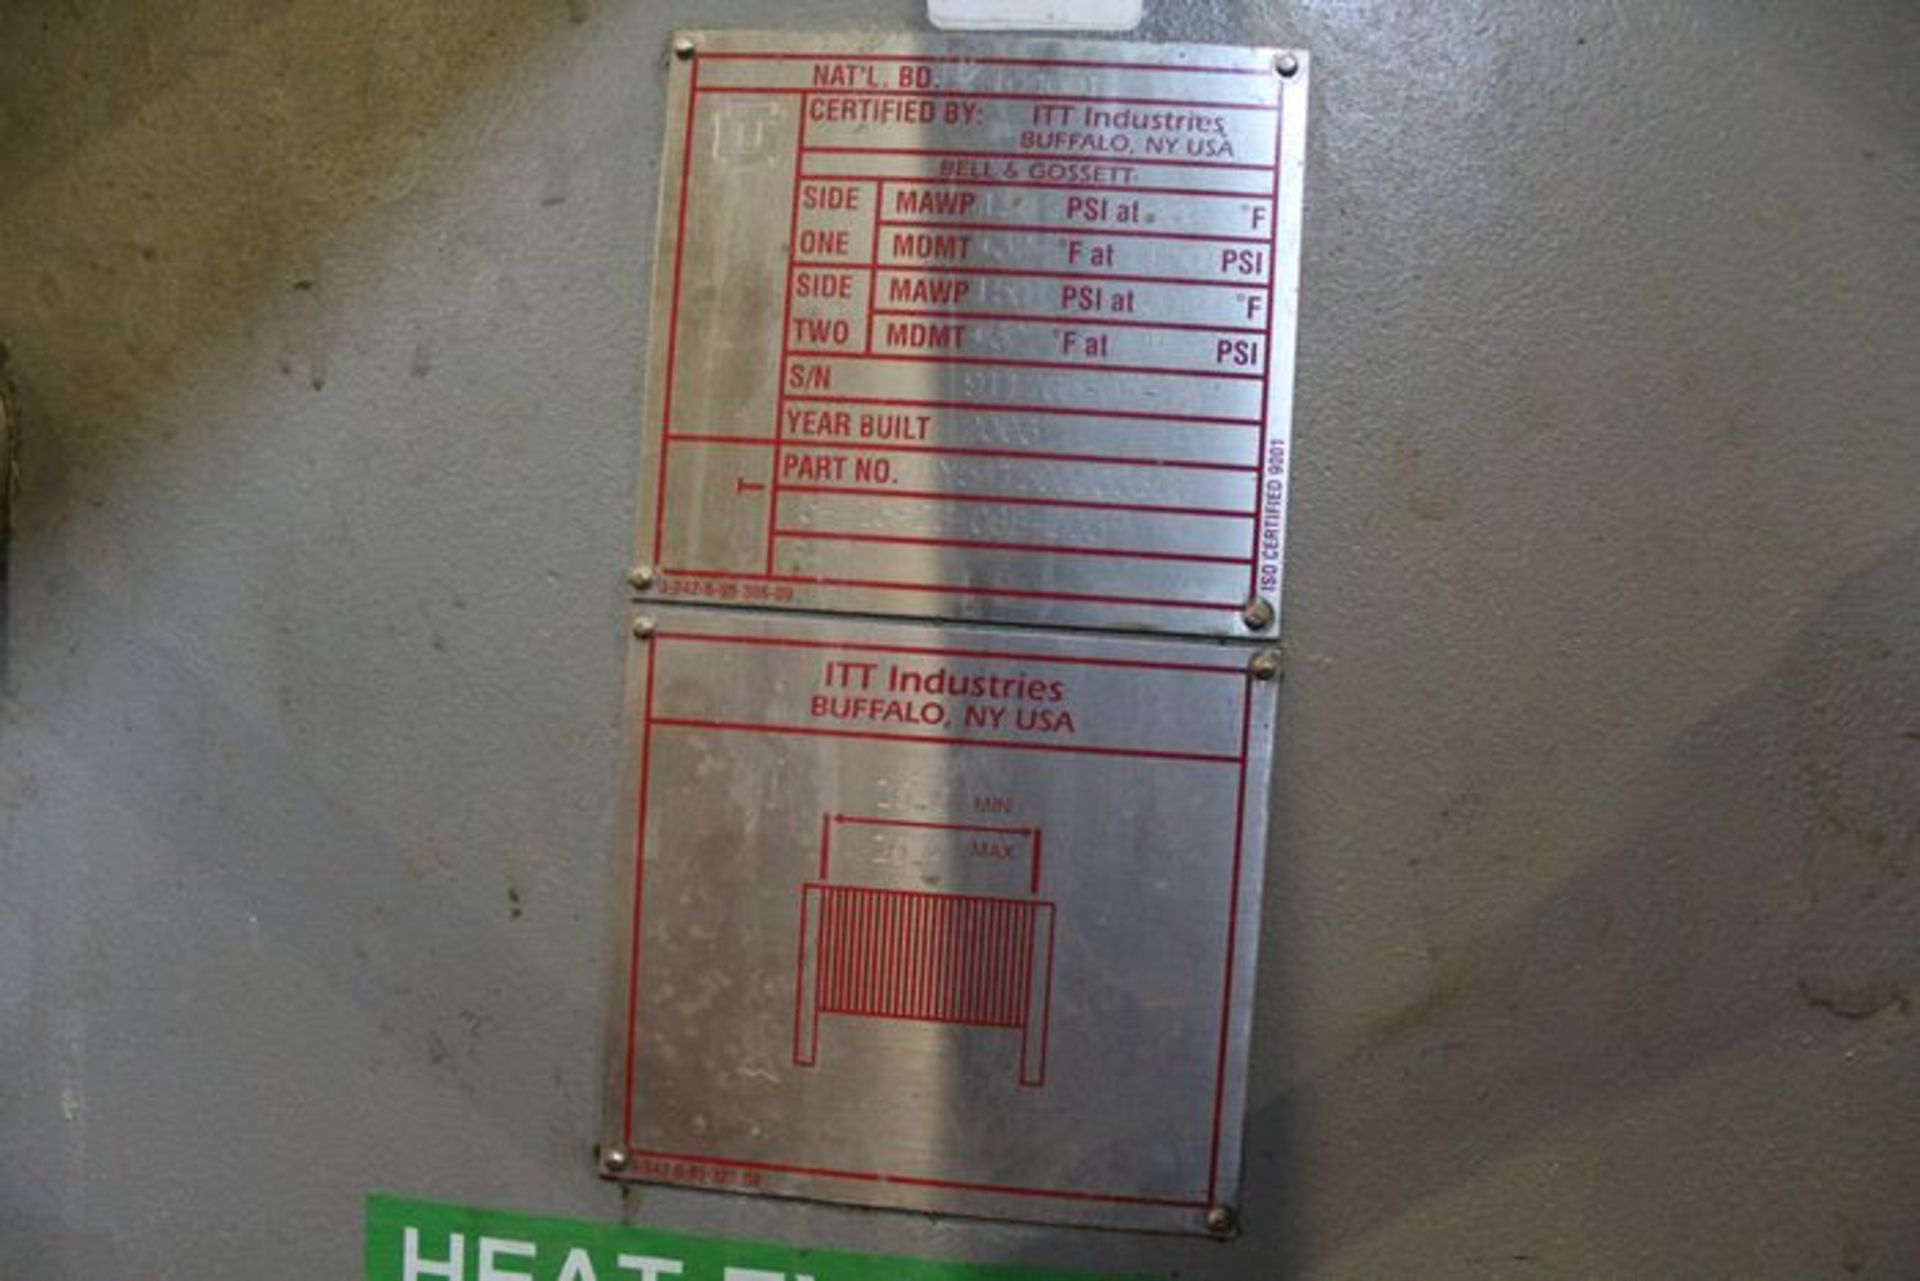 ITT Industries Plate Type Heat Exchanger, S/N 911760-01-02 | (Betty Crocker Warehouse) - Image 2 of 2